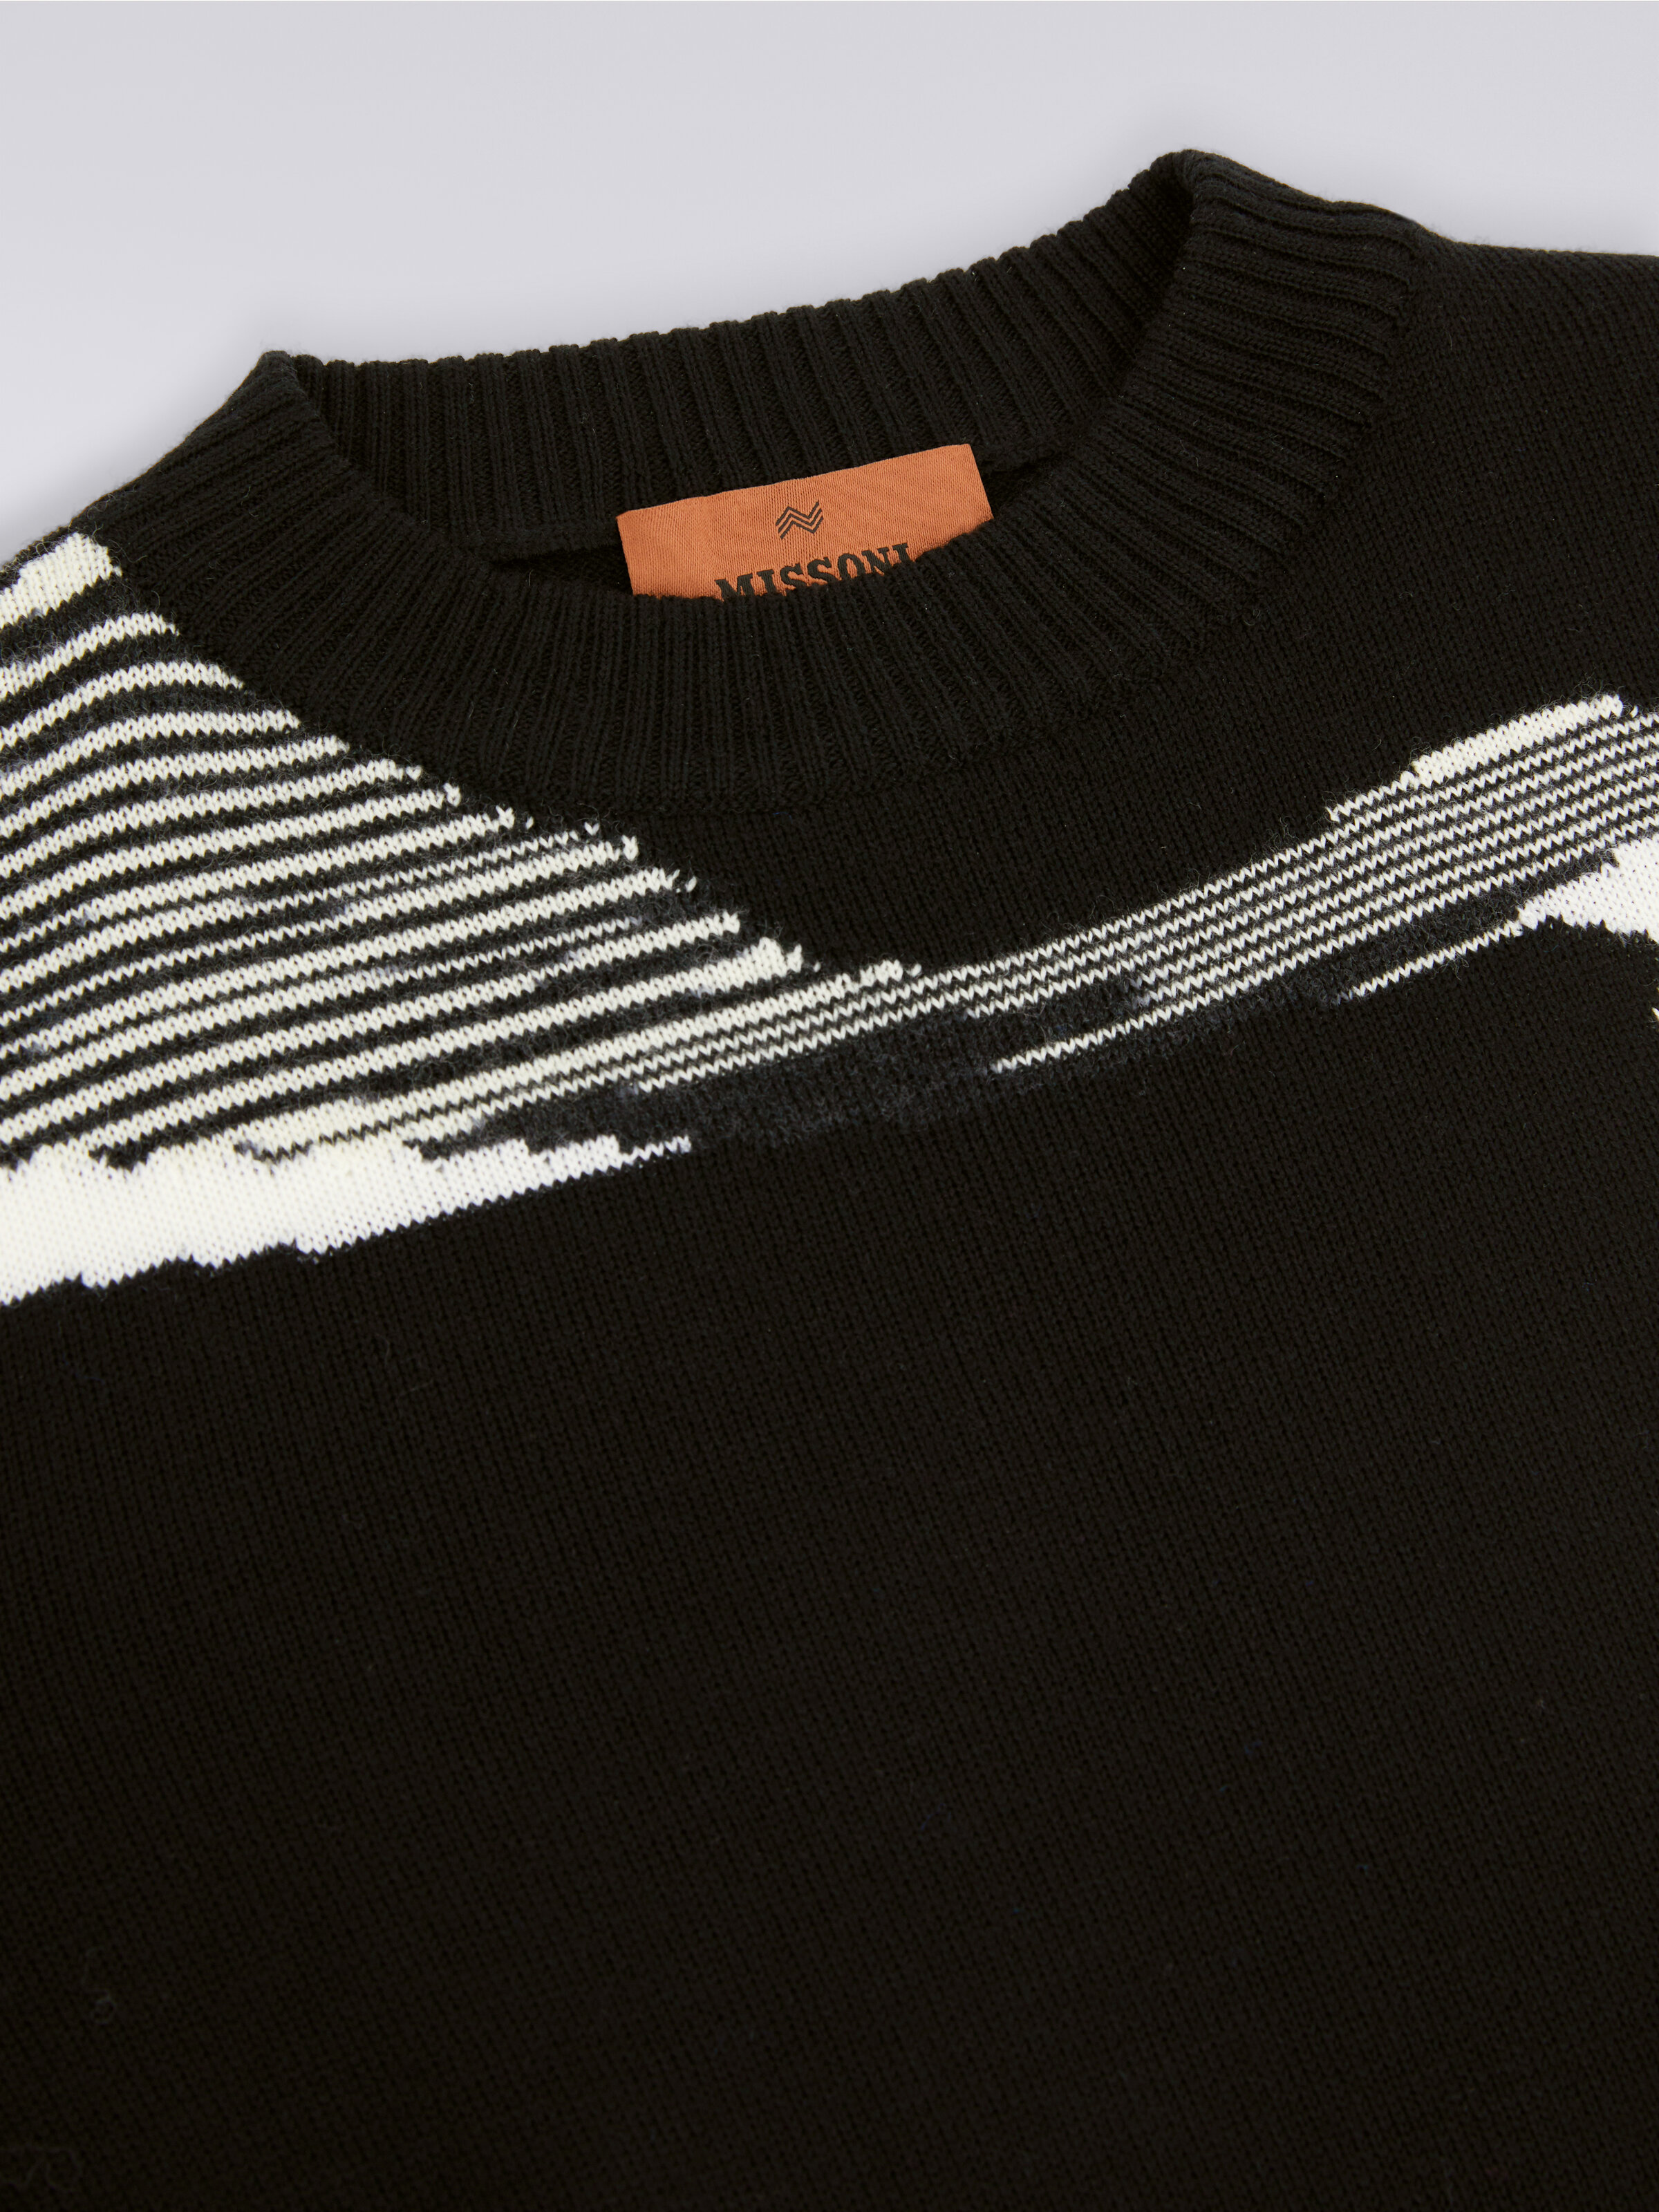 Pure virgin wool crew-neck sweater, Black & White - 2